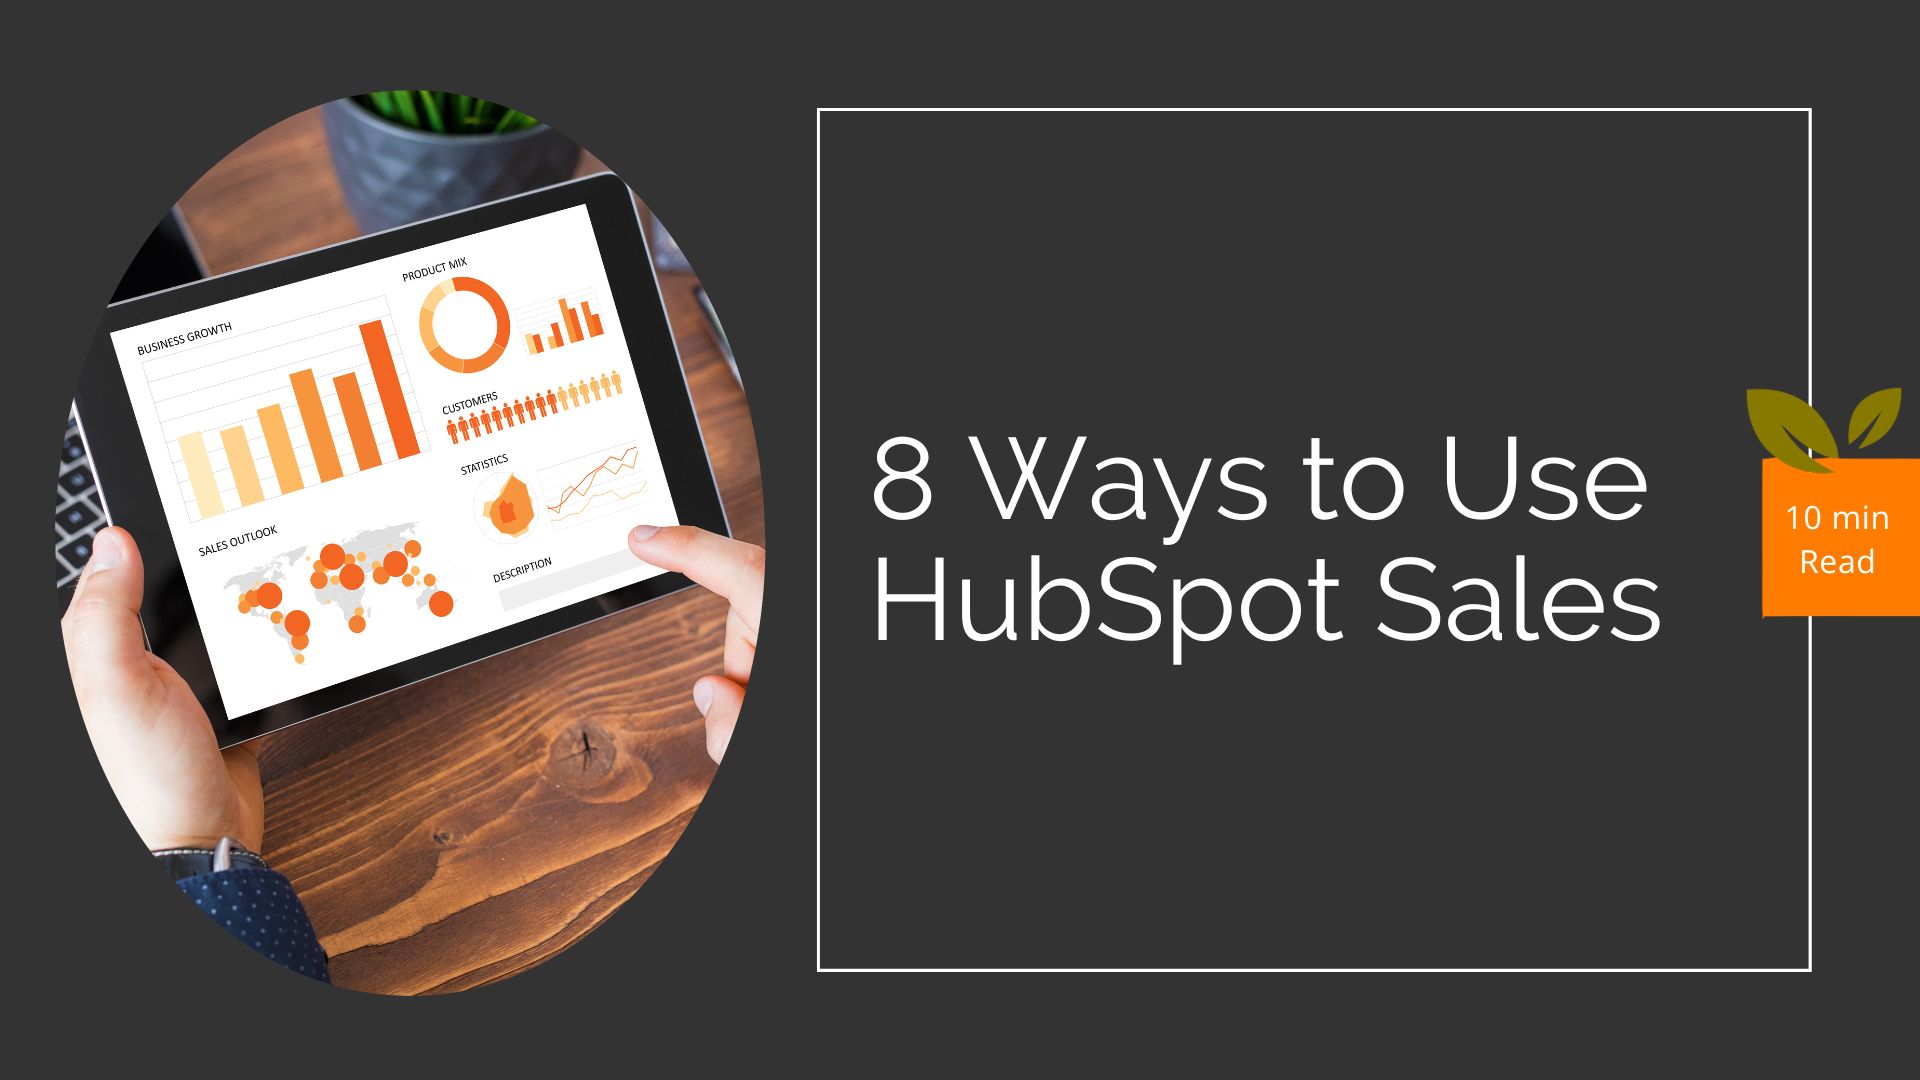 HubSpot Sales Processes to Adopt